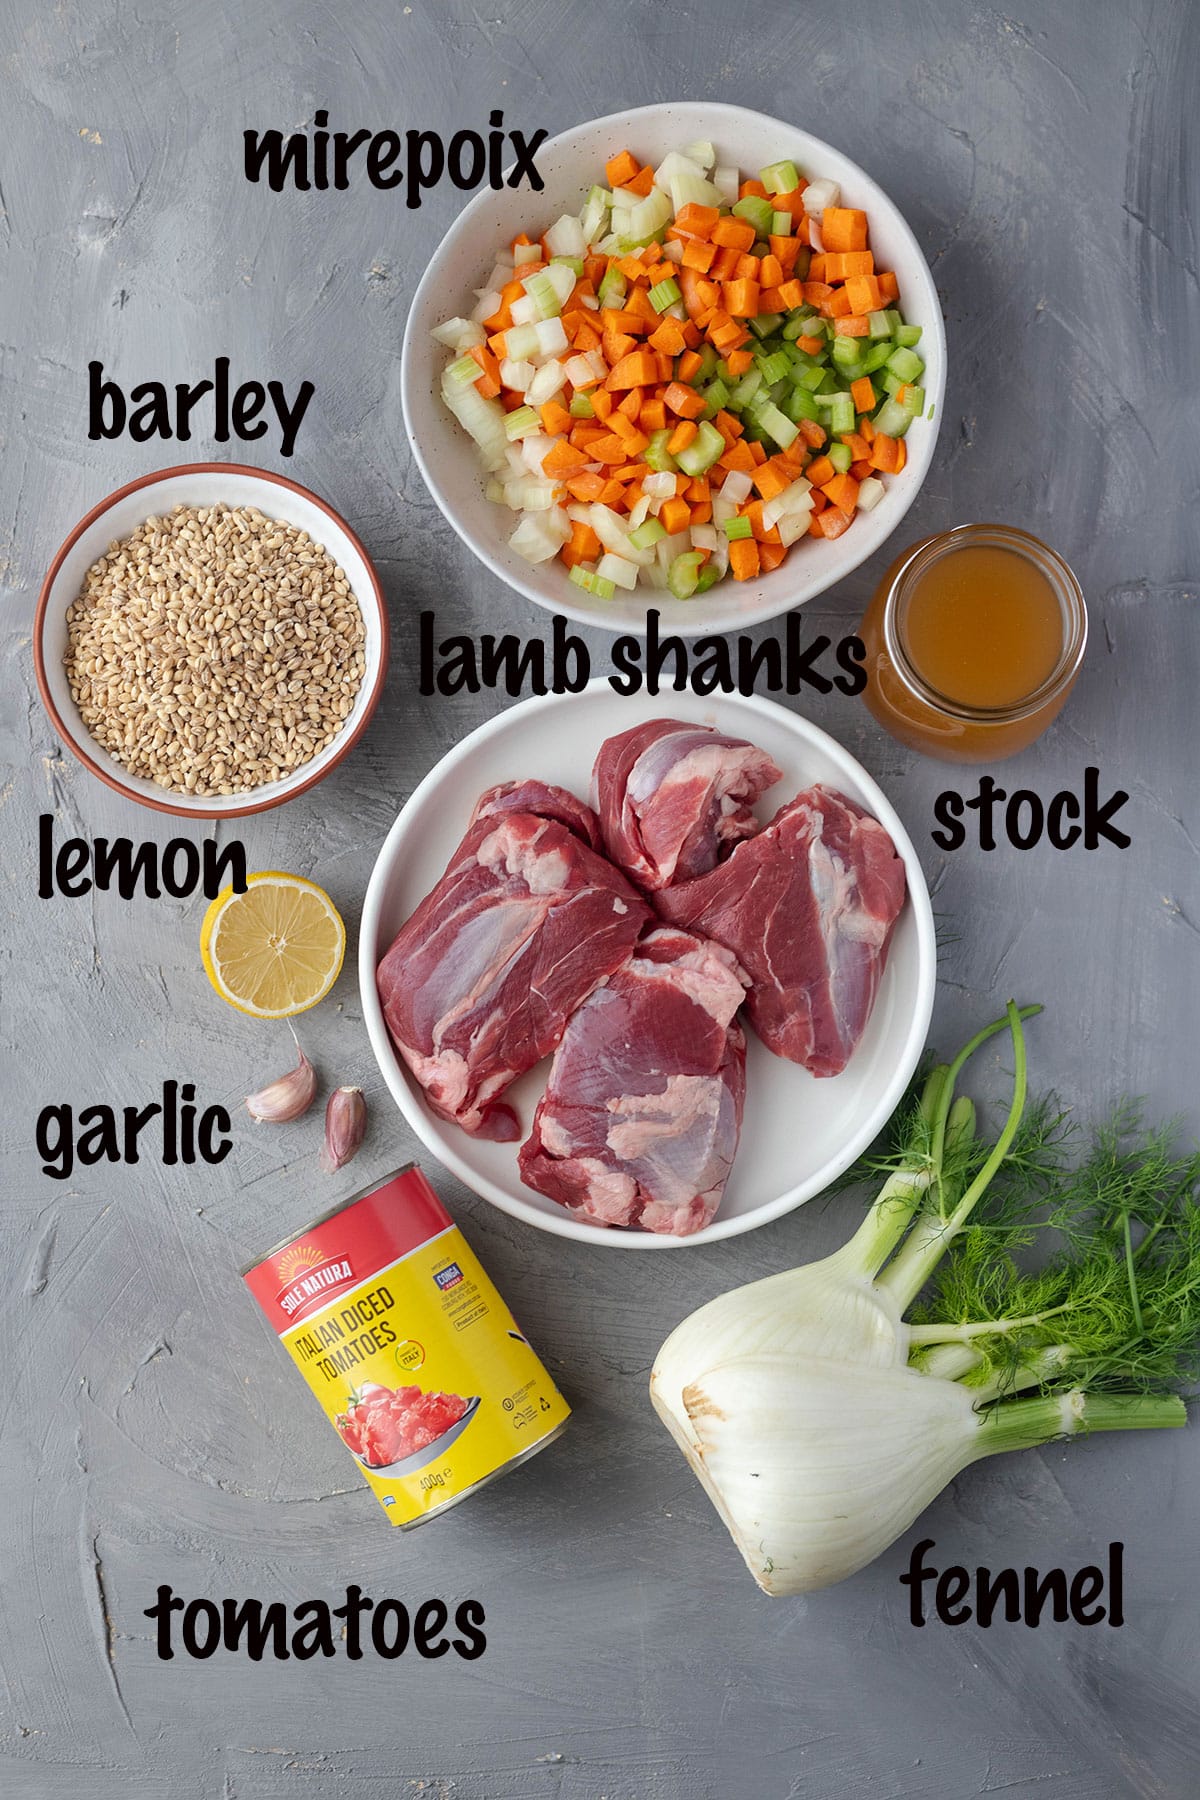 lamb shank soup ingredients shown top to bottom mirepoix, stock, lamb shanks, fennel, tomatoes, garlic, lemon and barley